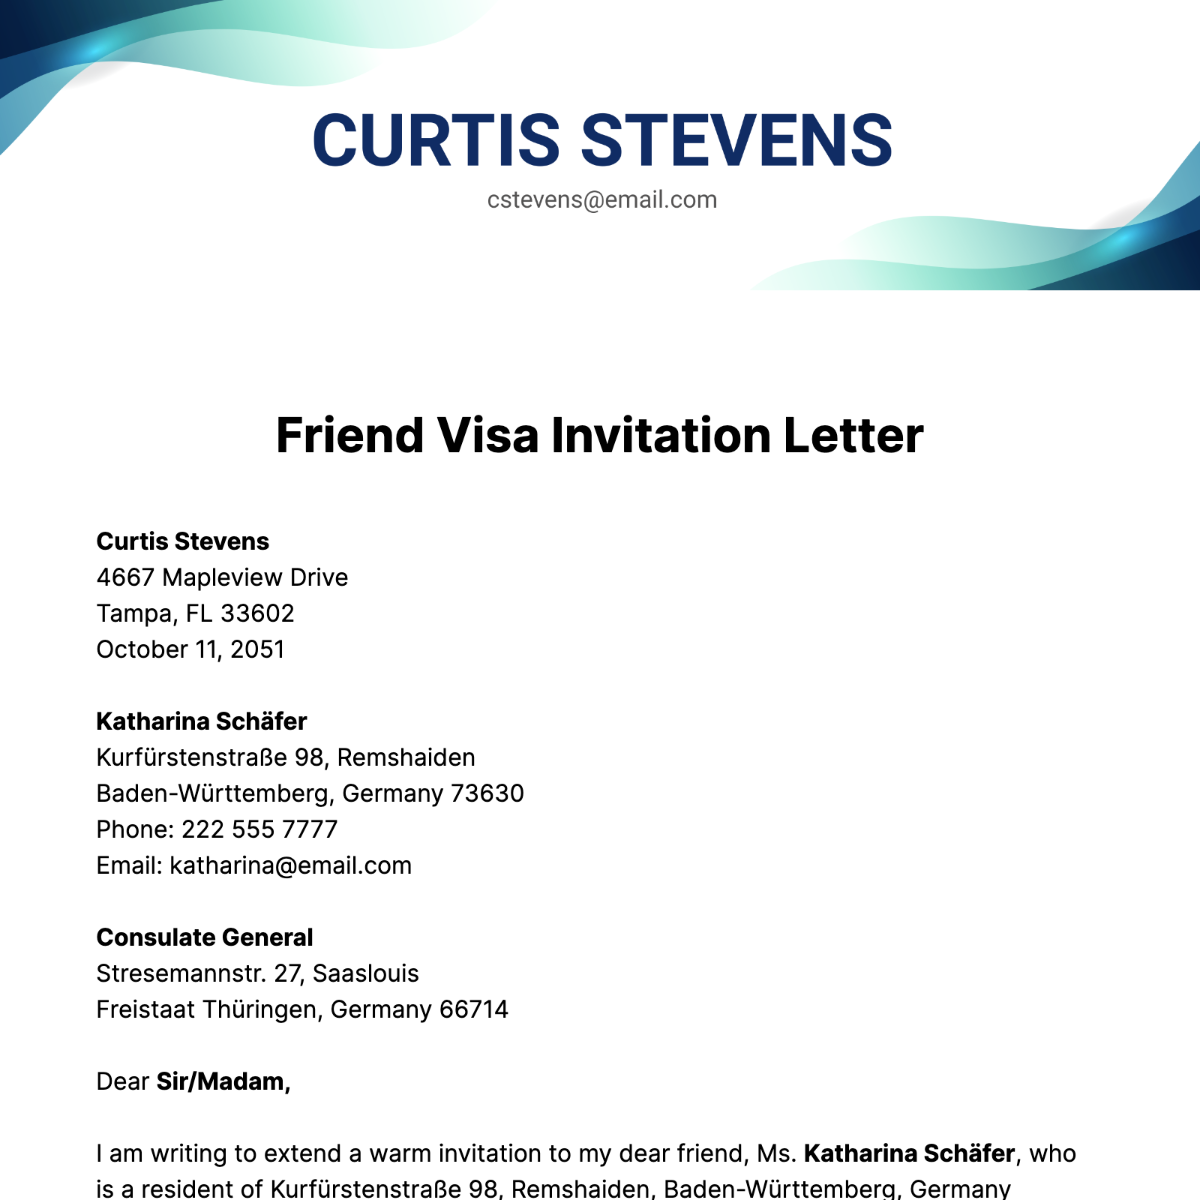 Friend Visa Invitation Letter Template